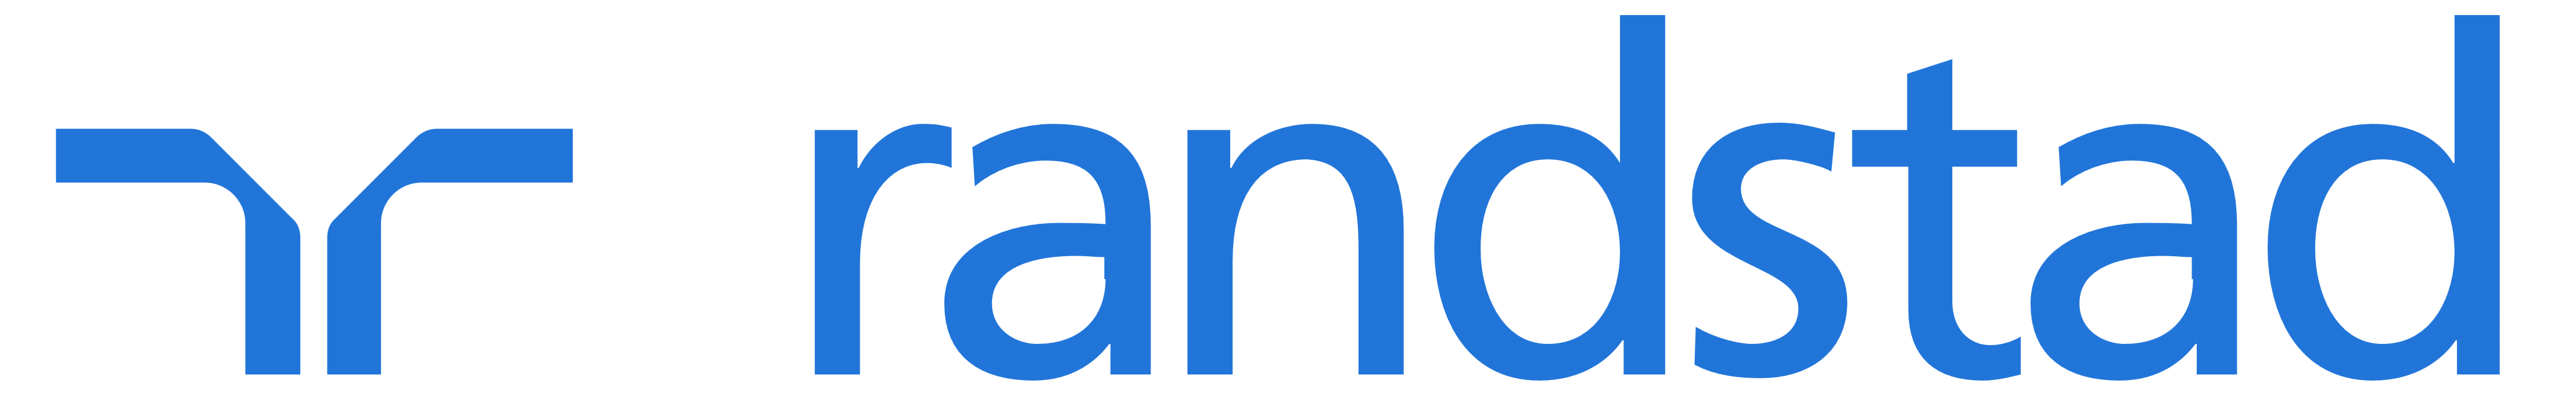 Randstand logo